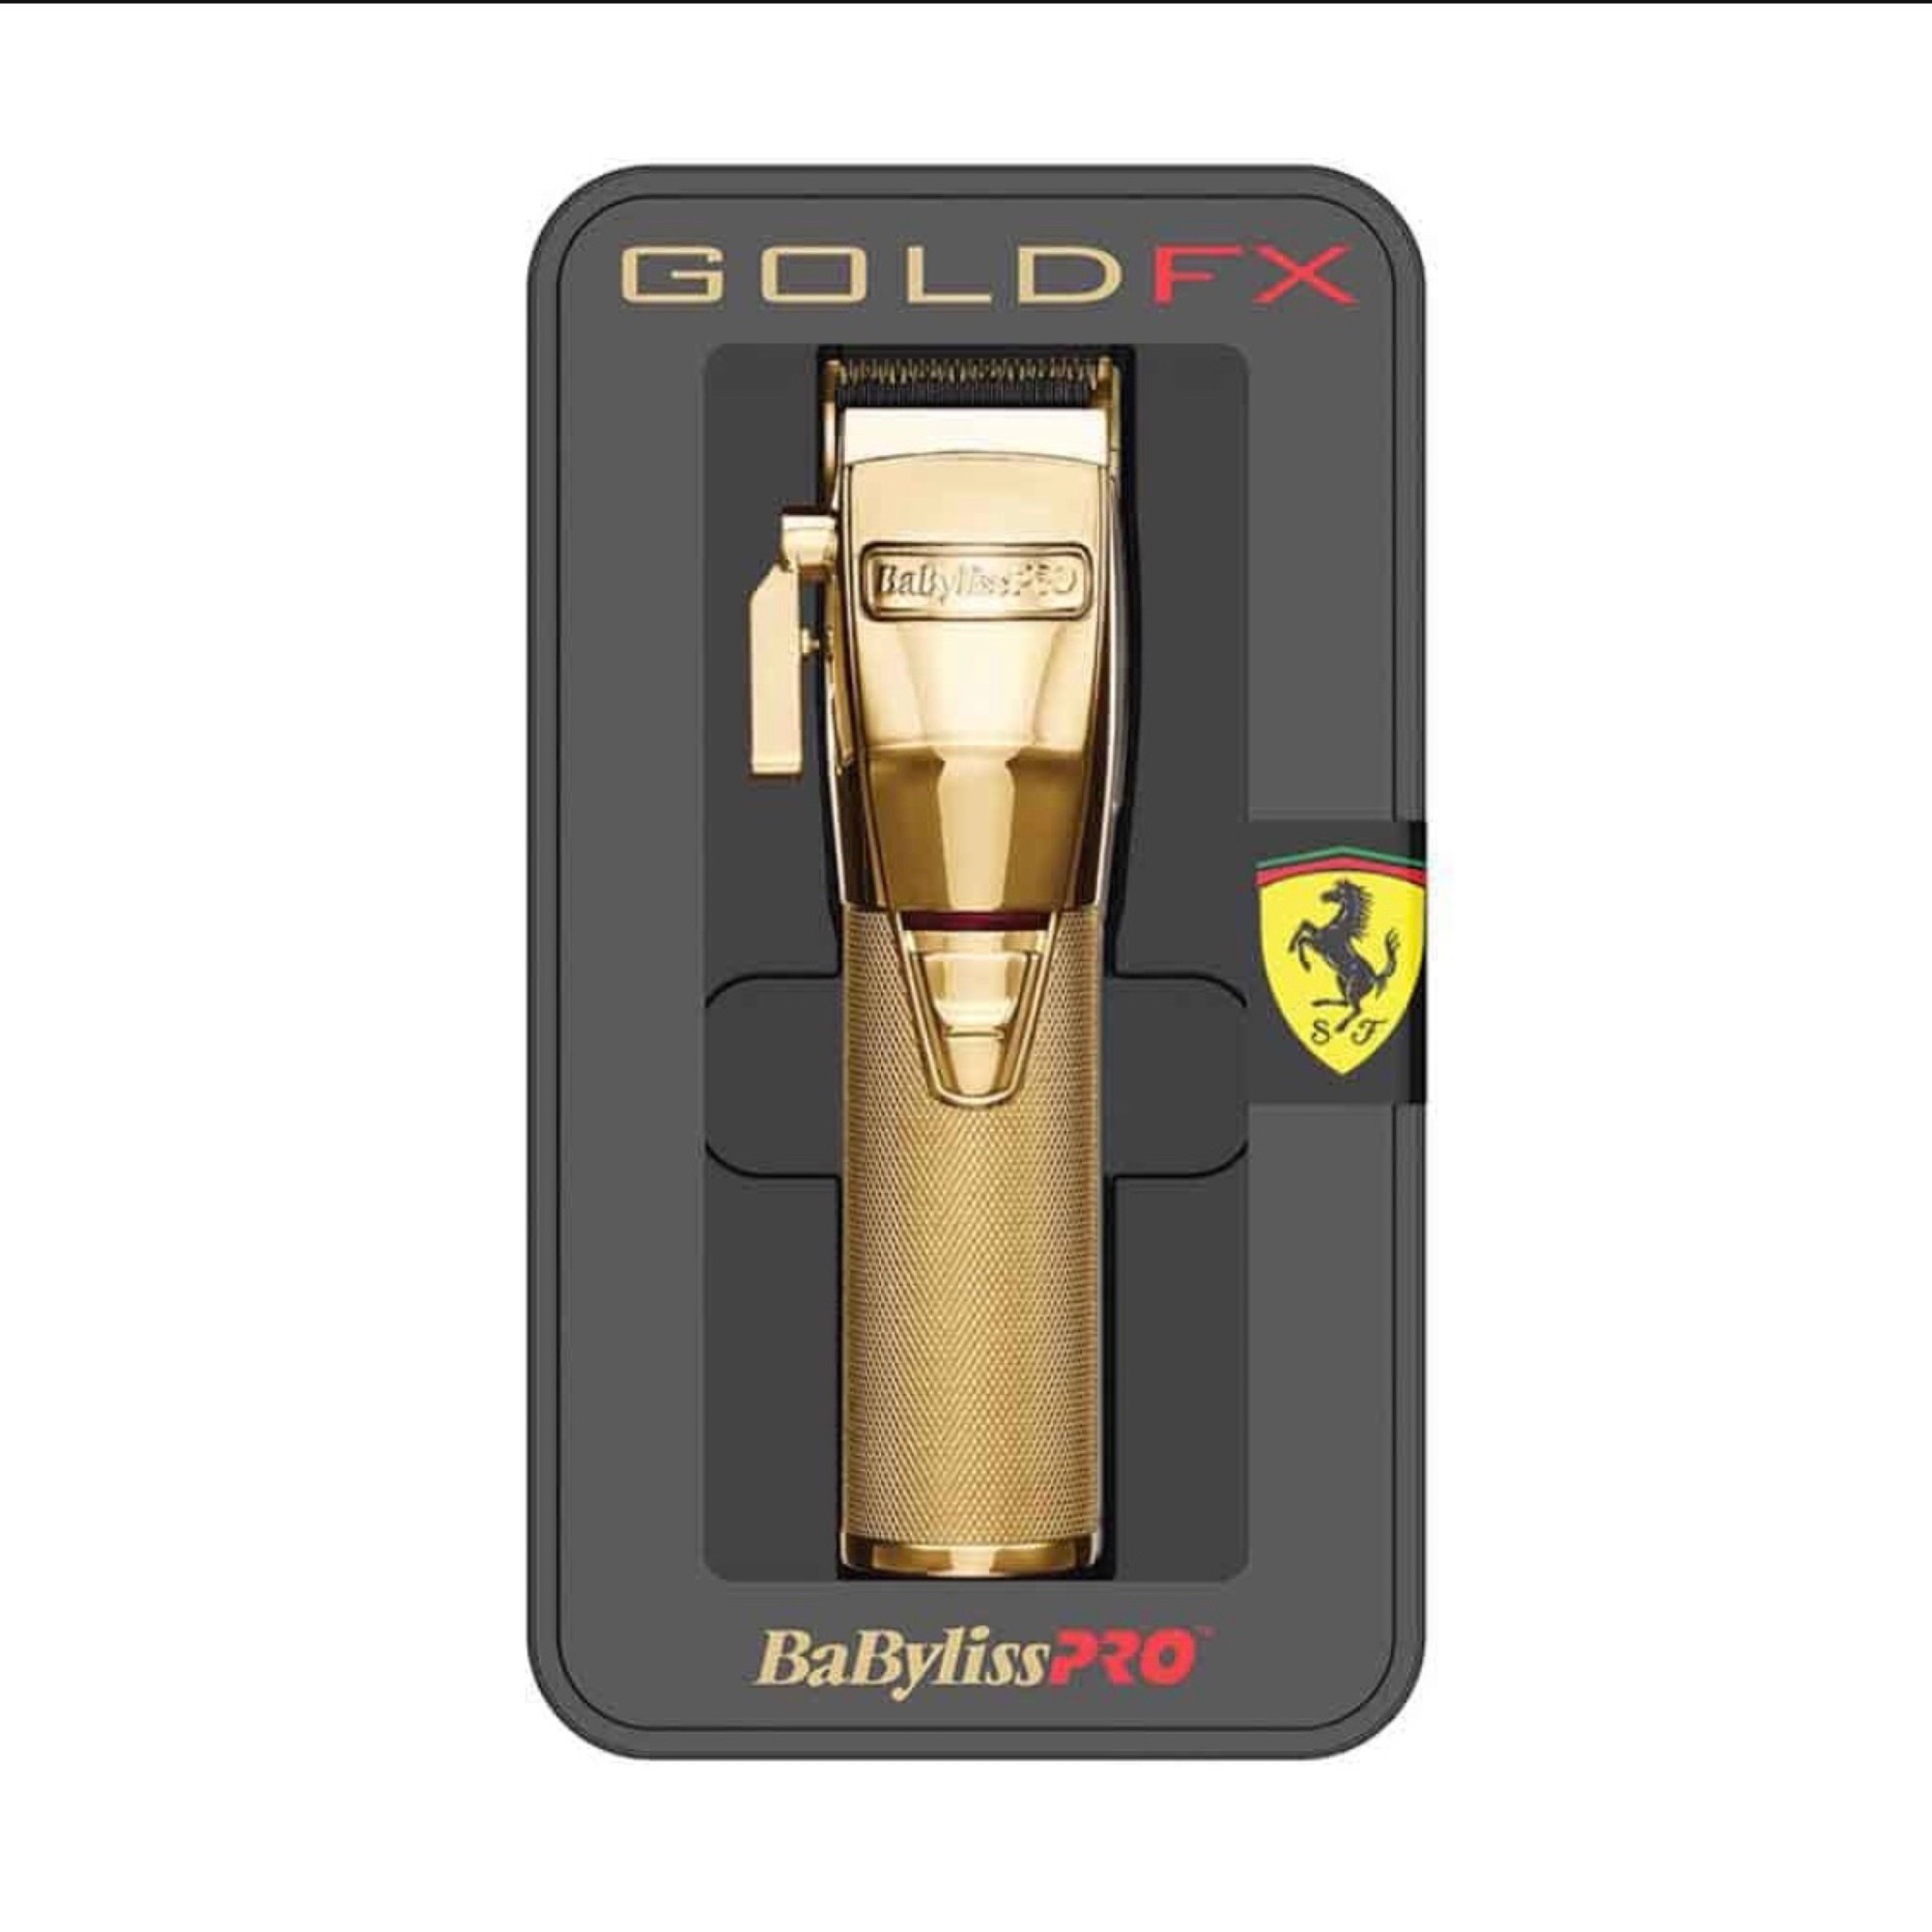 buy babyliss pro gold fx trimmer